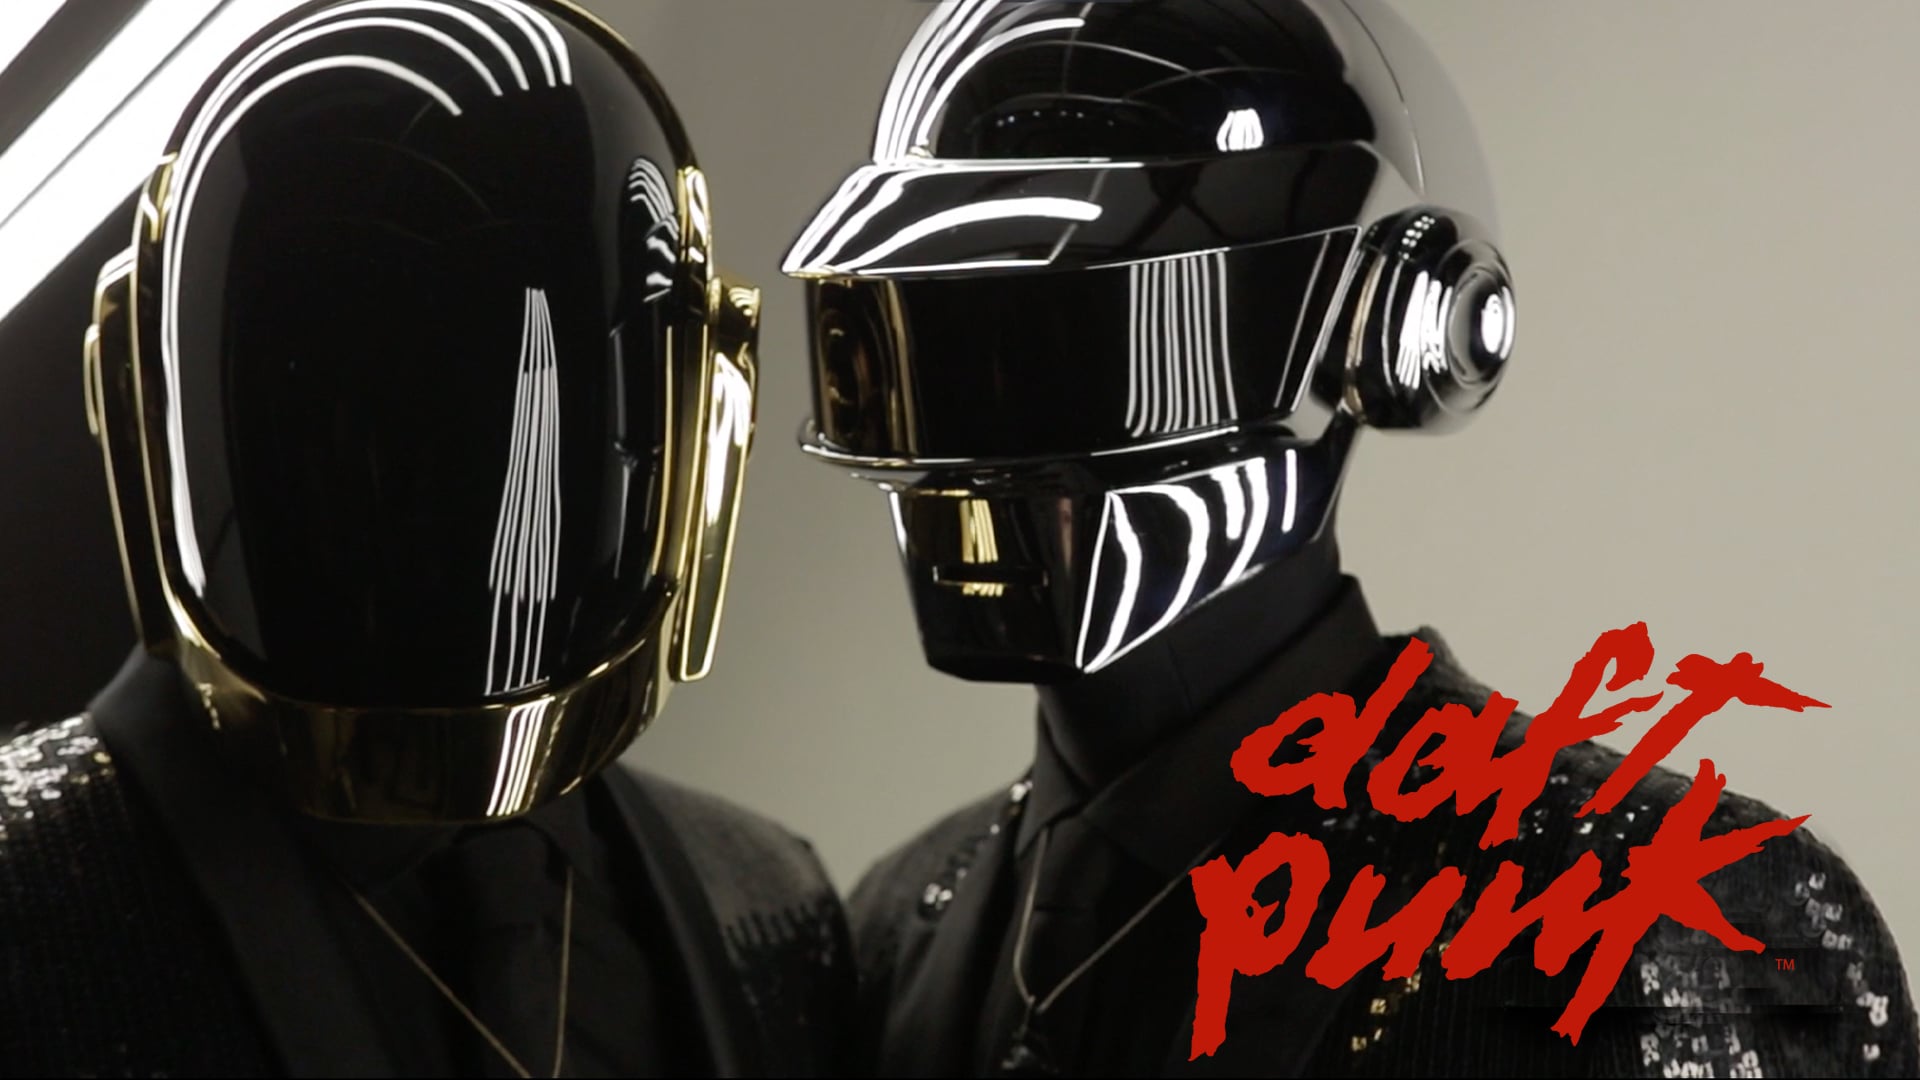 Daft Punk "Get Lucky" Promo